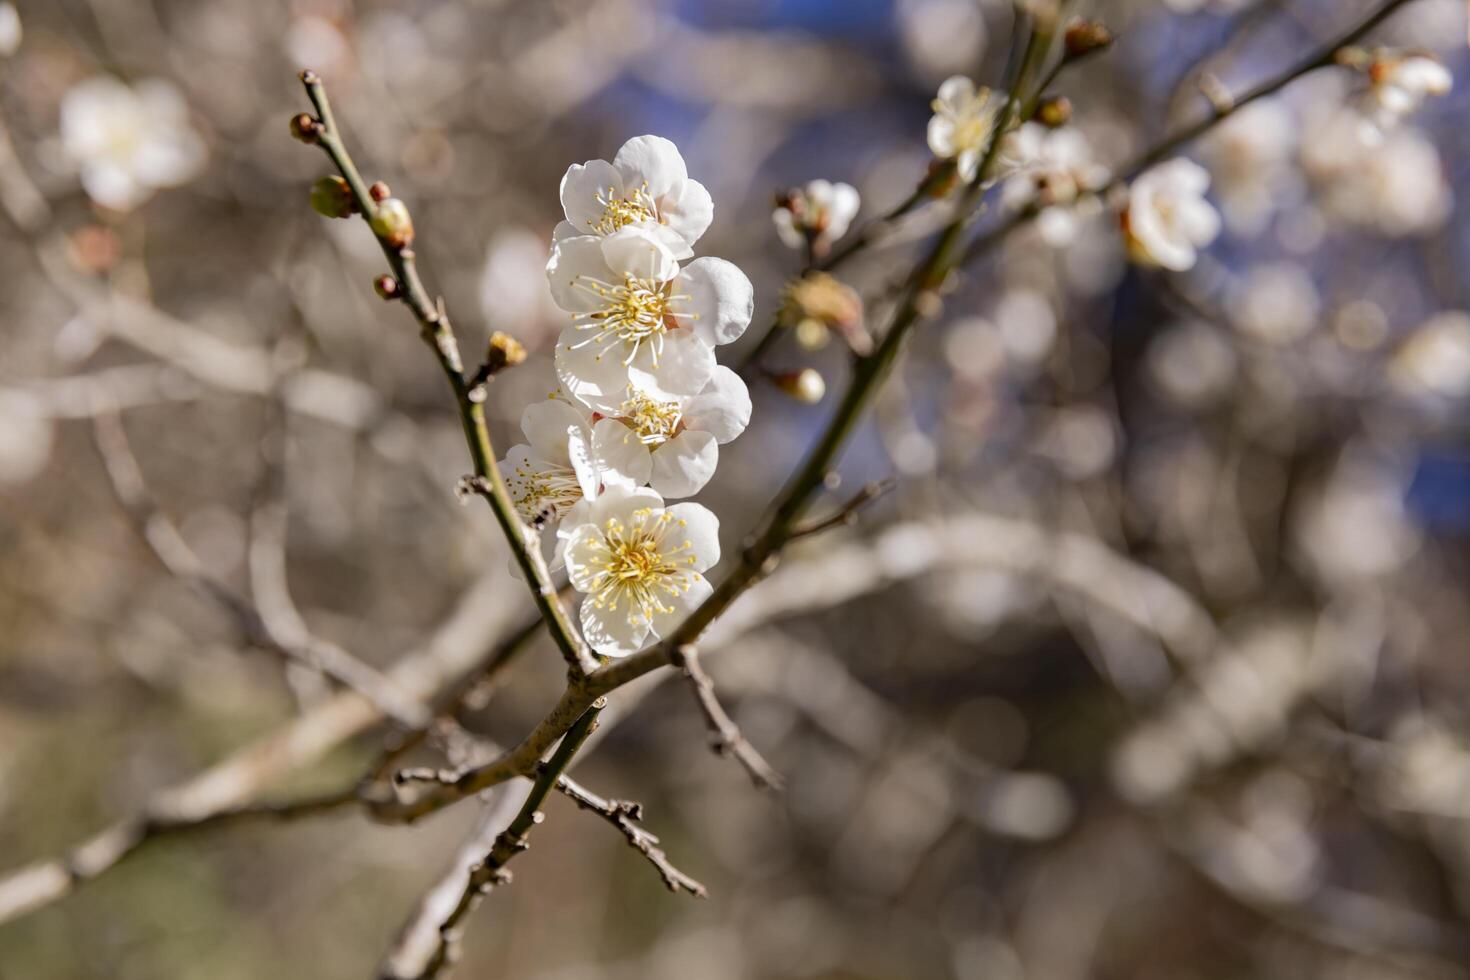 wit Pruim bloemen Bij atami Pruim park in shizuoka dag dichtbij omhoog foto